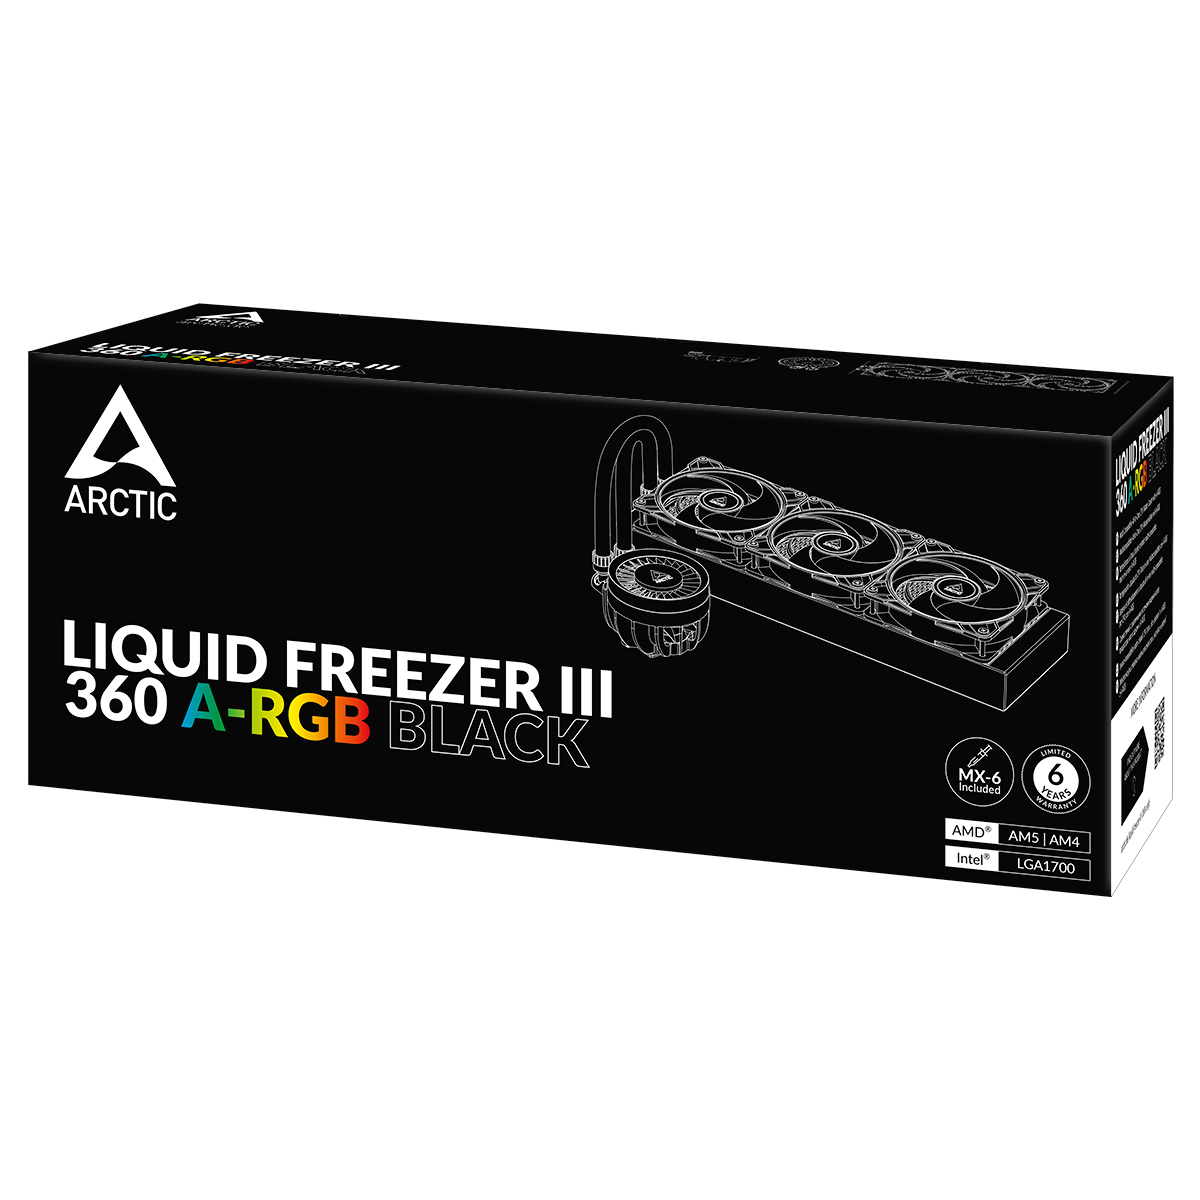 Liquid_Freezer_III_360_ARGB_Black_Rainbow_G11